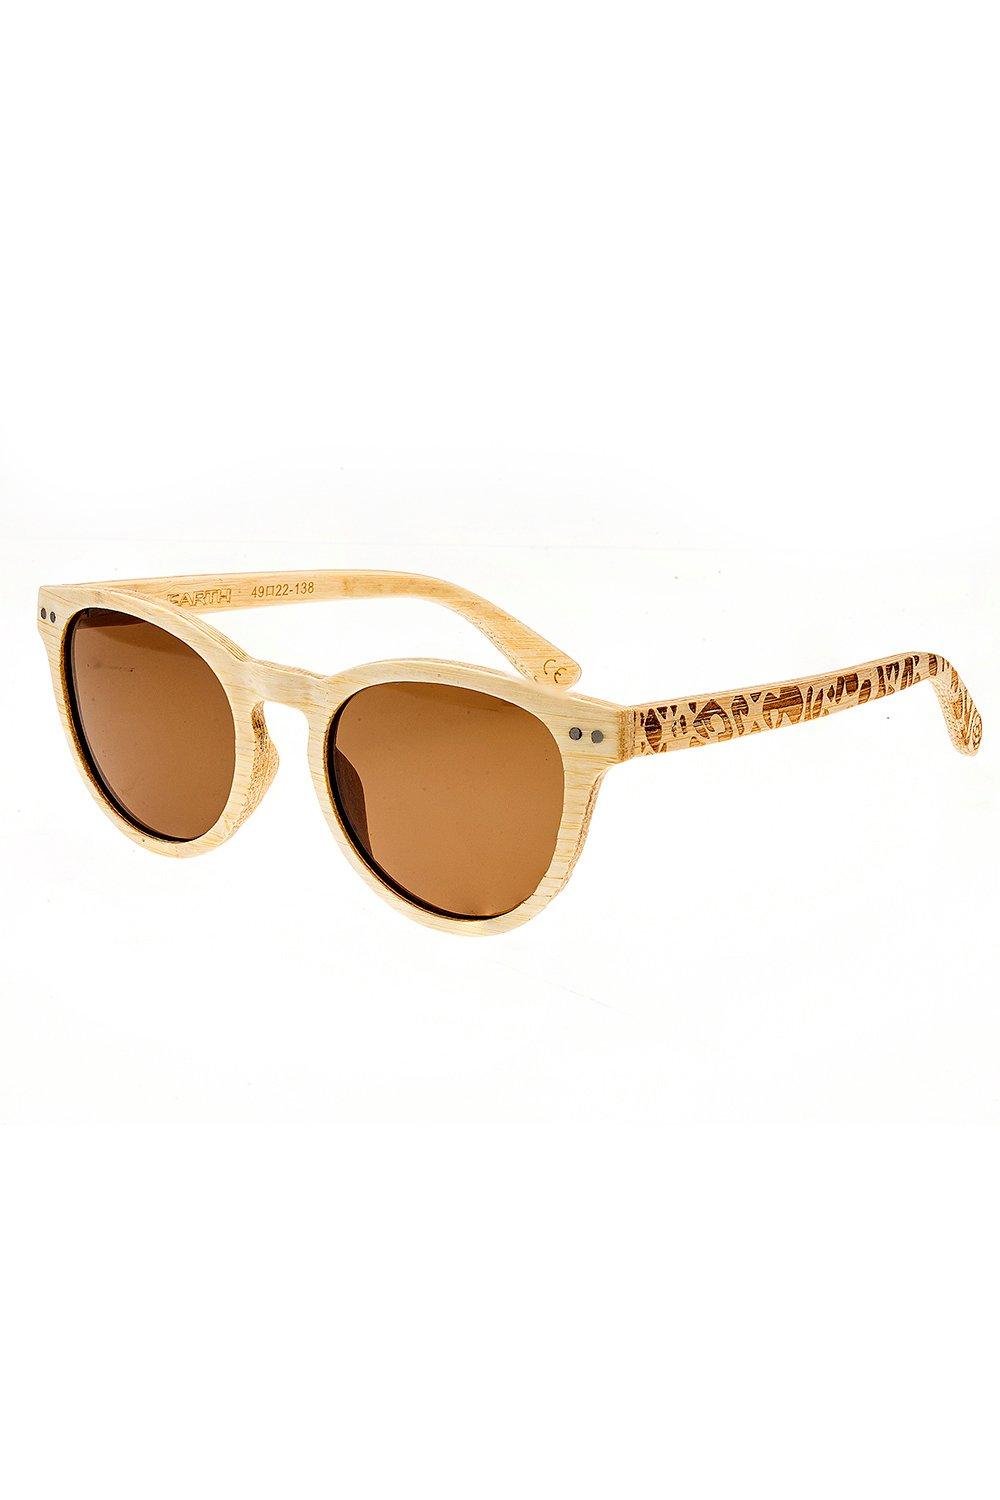 Copacabana Polarized Sunglasses